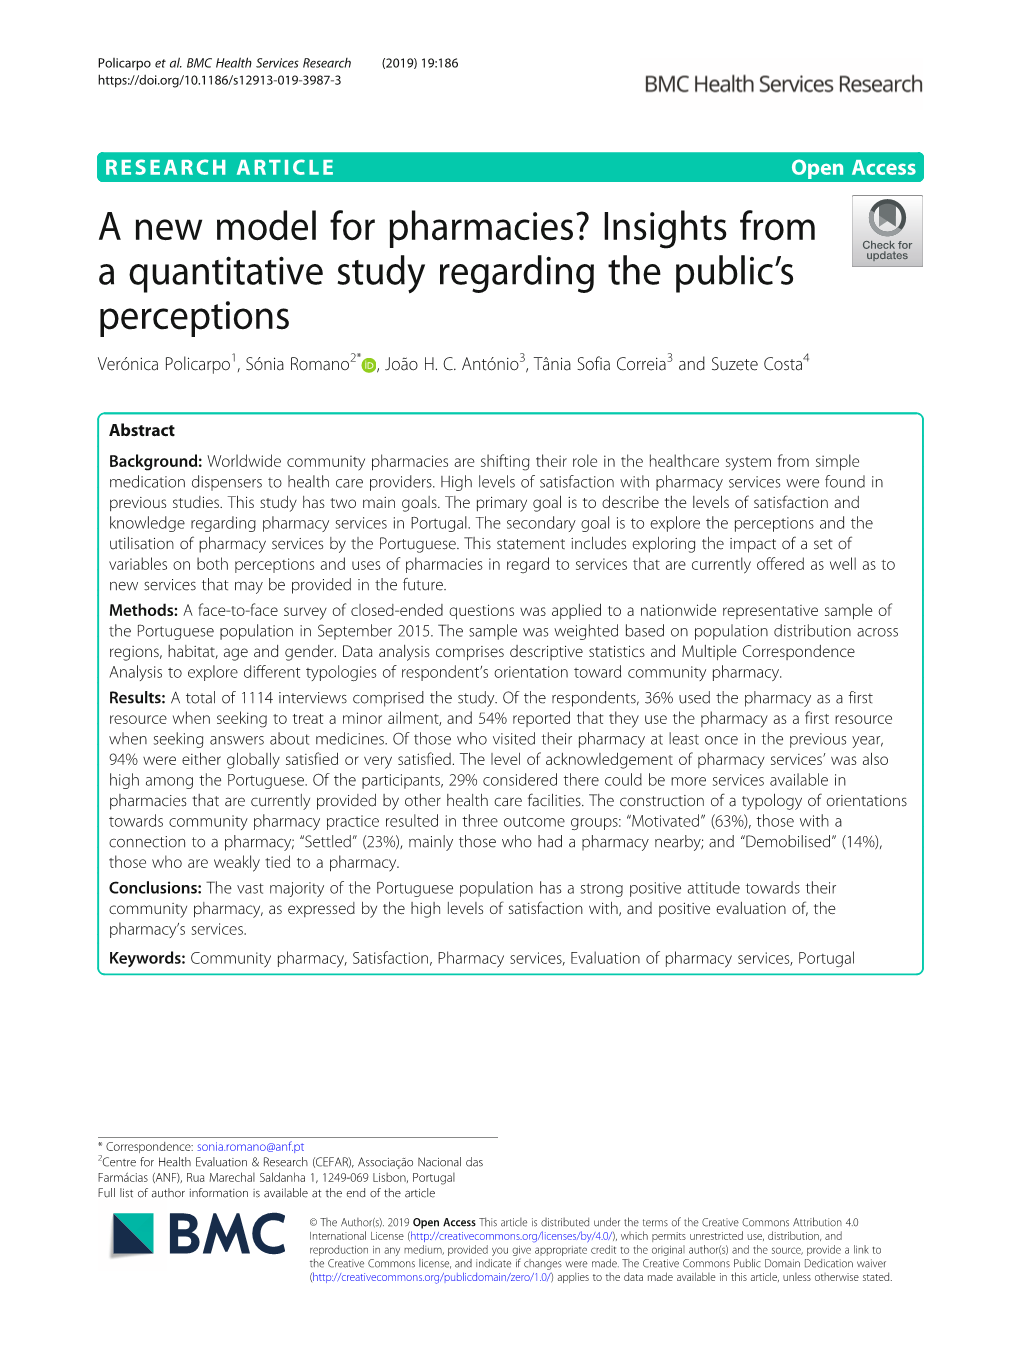 A New Model for Pharmacies? Insights from a Quantitative Study Regarding the Public’S Perceptions Verónica Policarpo1, Sónia Romano2* , João H